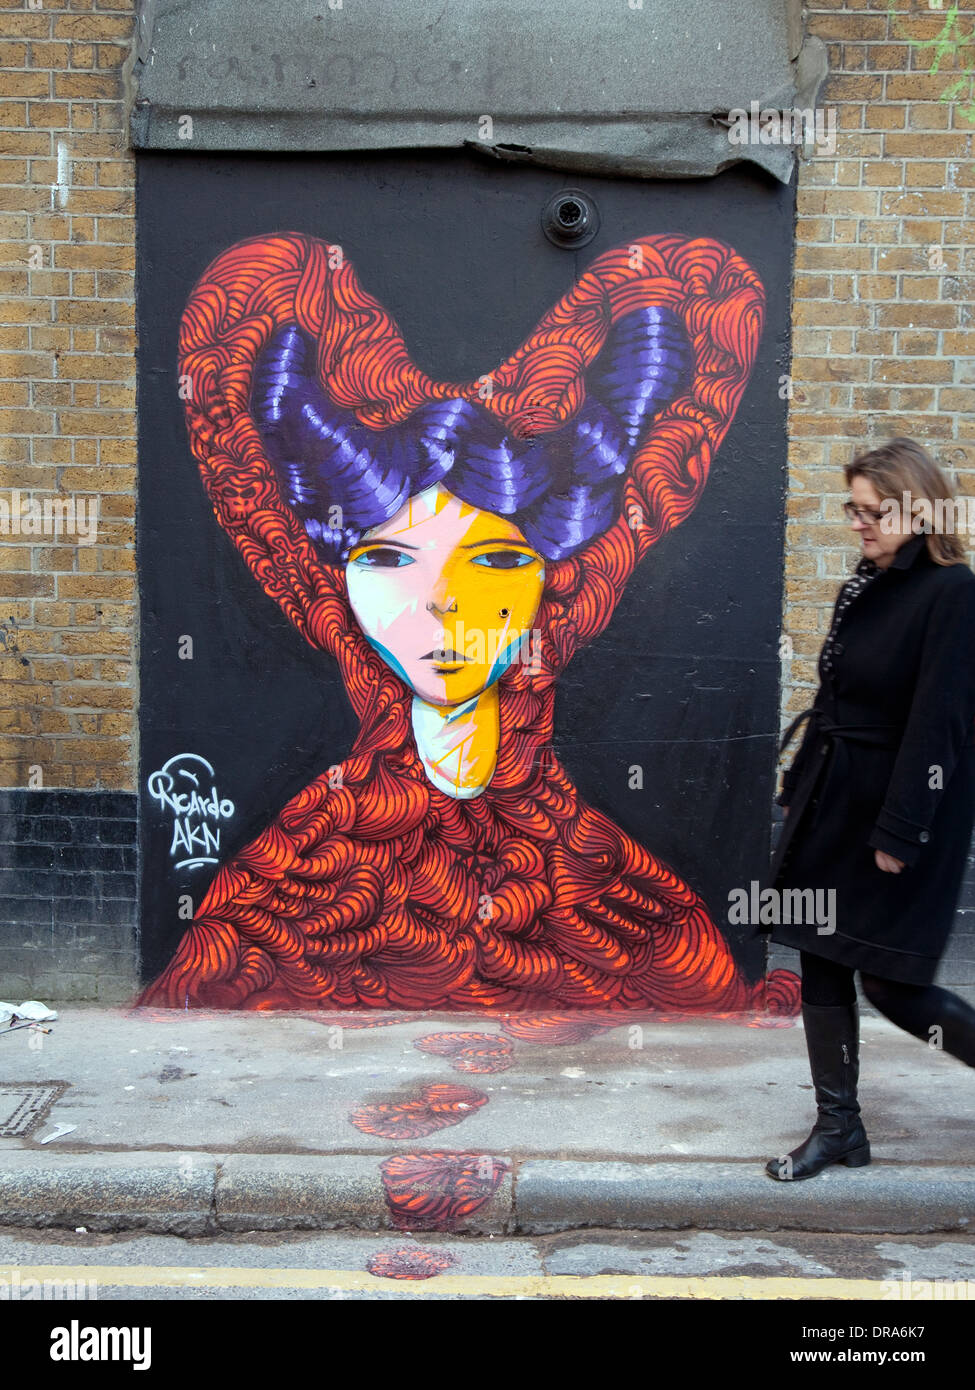 Mural by artist Ricardo Akn in Shoreditch, London Stock Photo